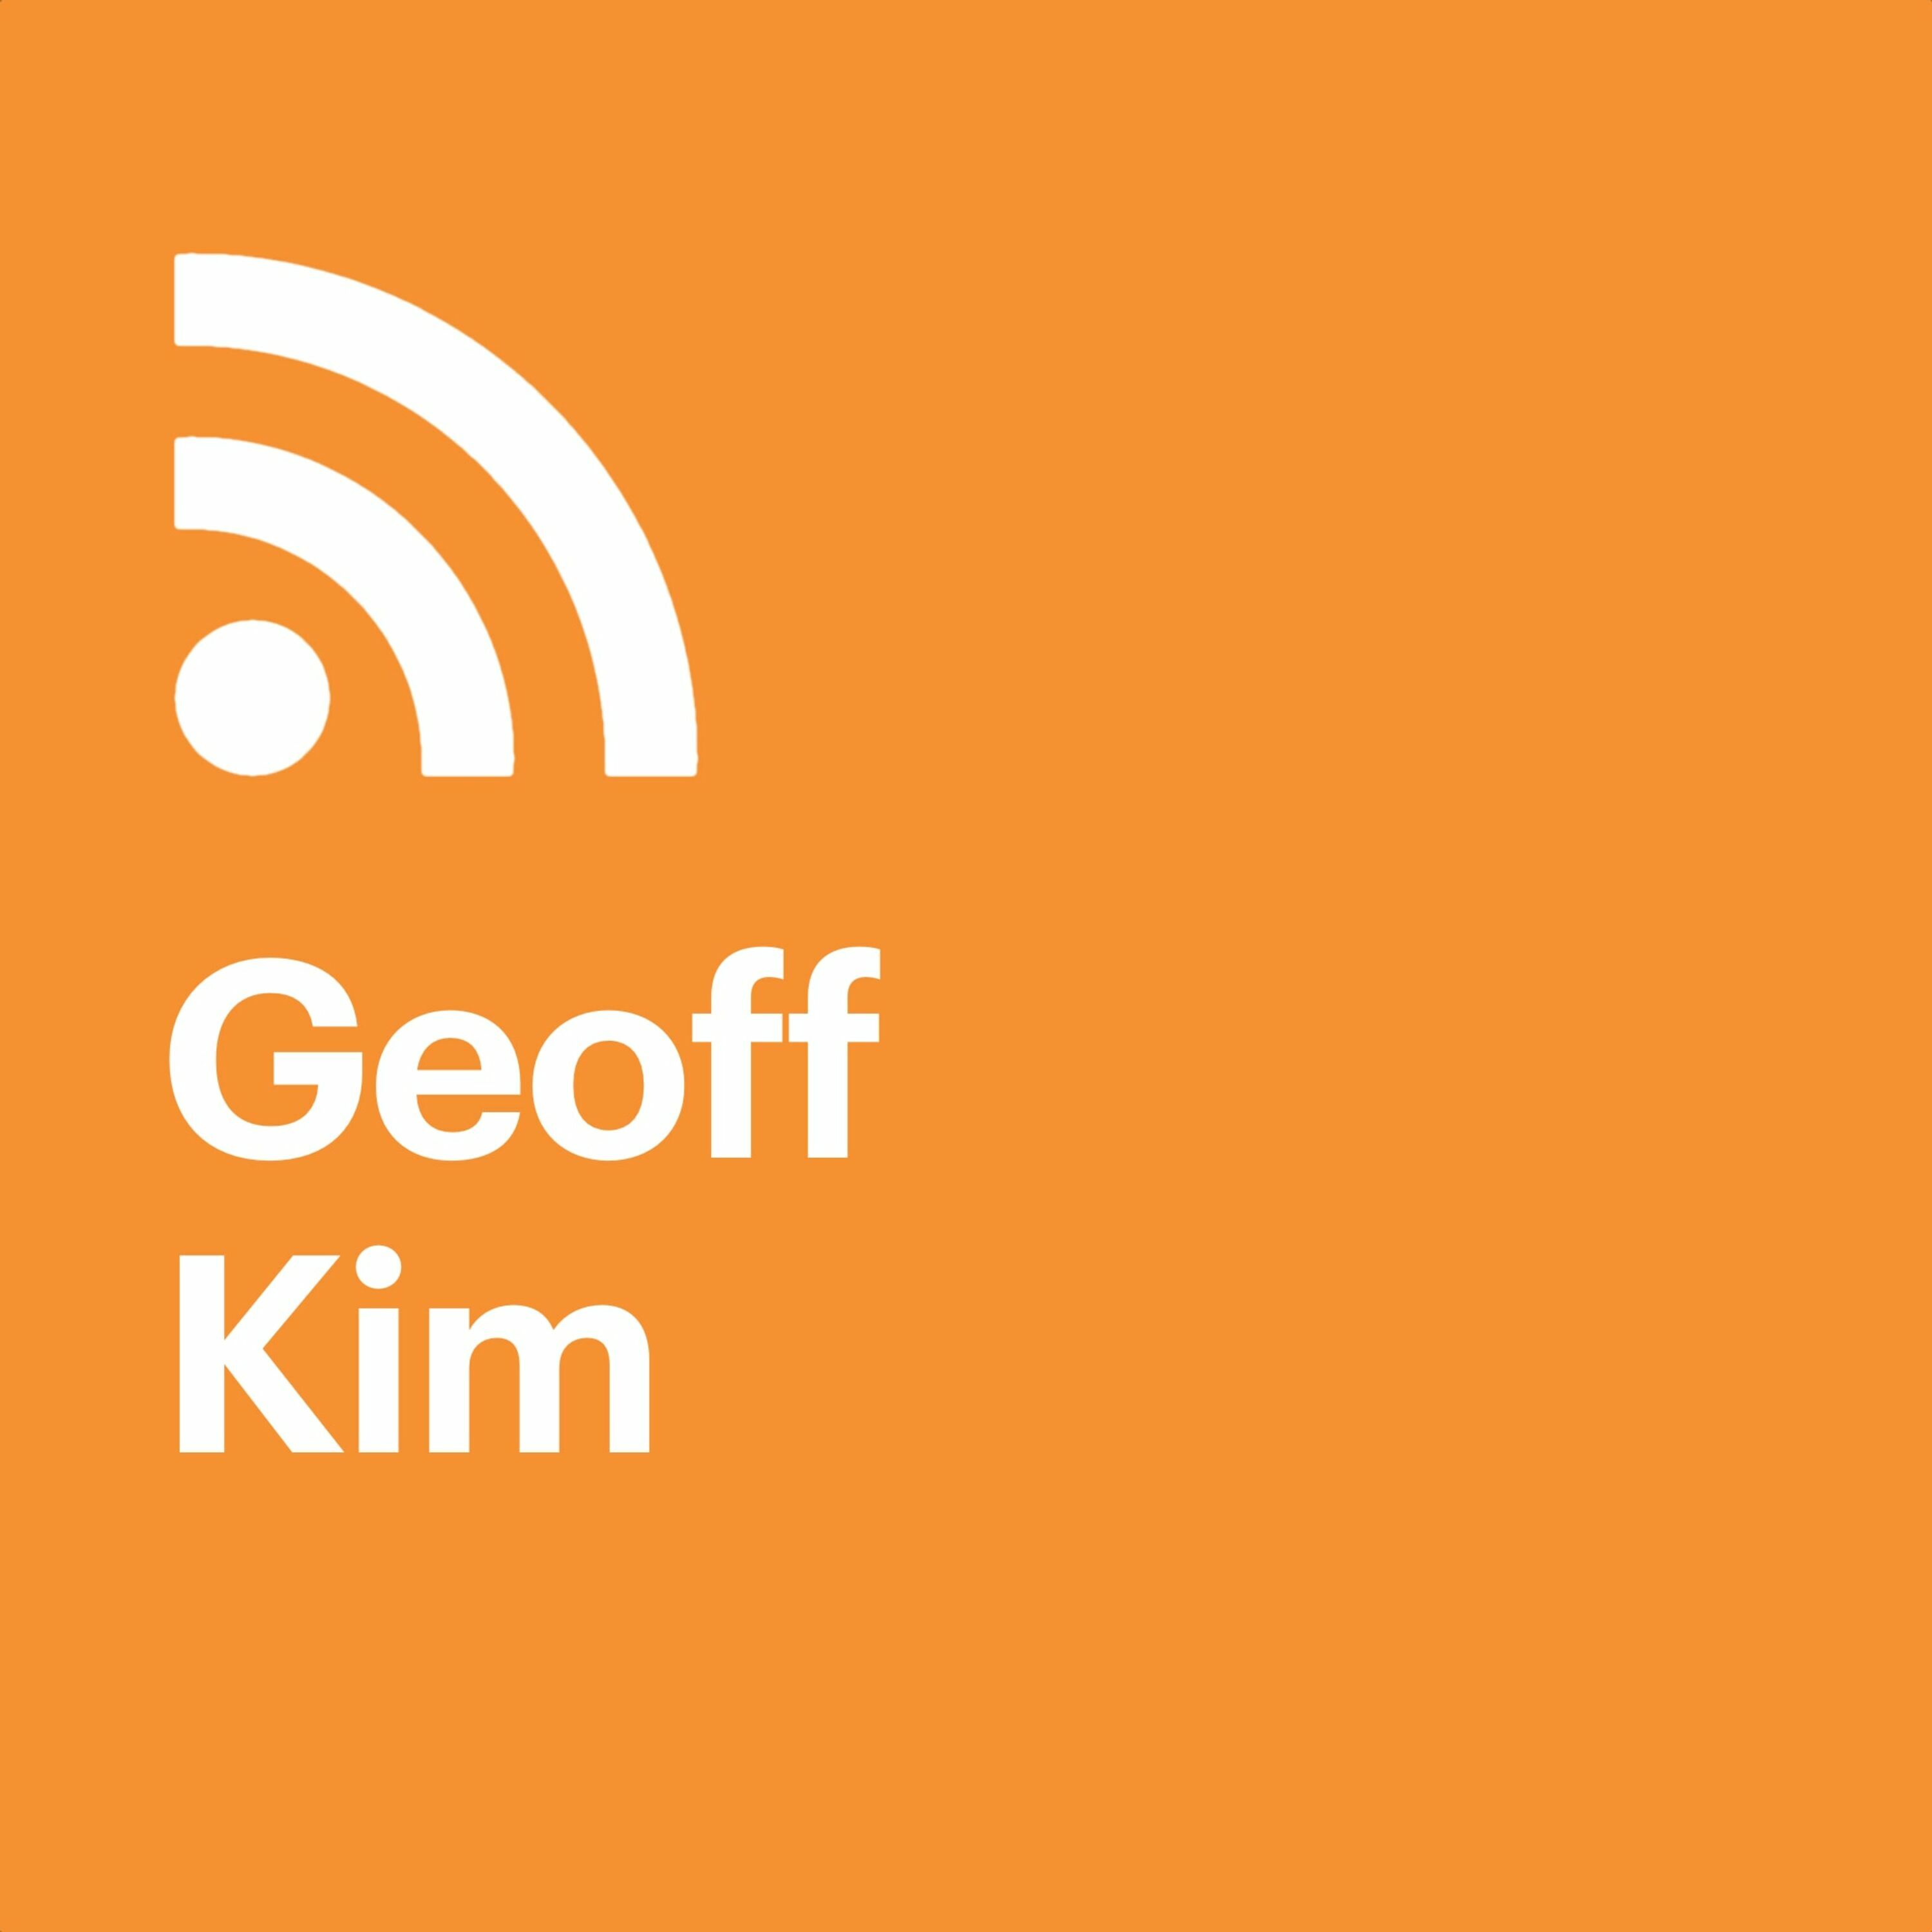 Geoff Kim